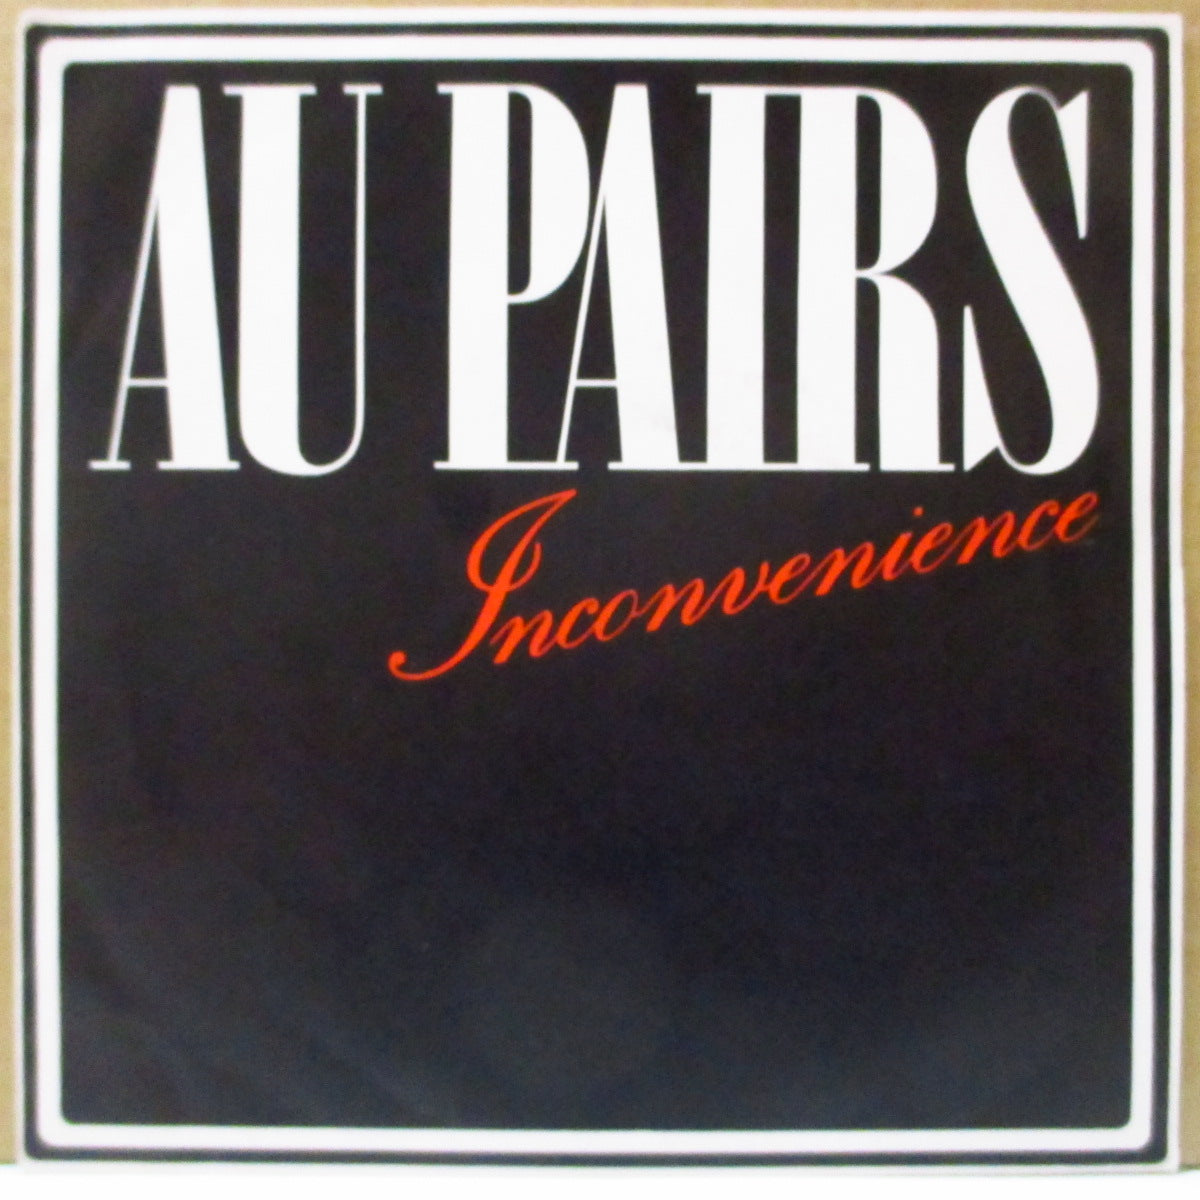 AU PAIRS (オー・ペアーズ)  - Inconvenience (UK オリジナル 7インチ+光沢ソフト紙ジャケ)